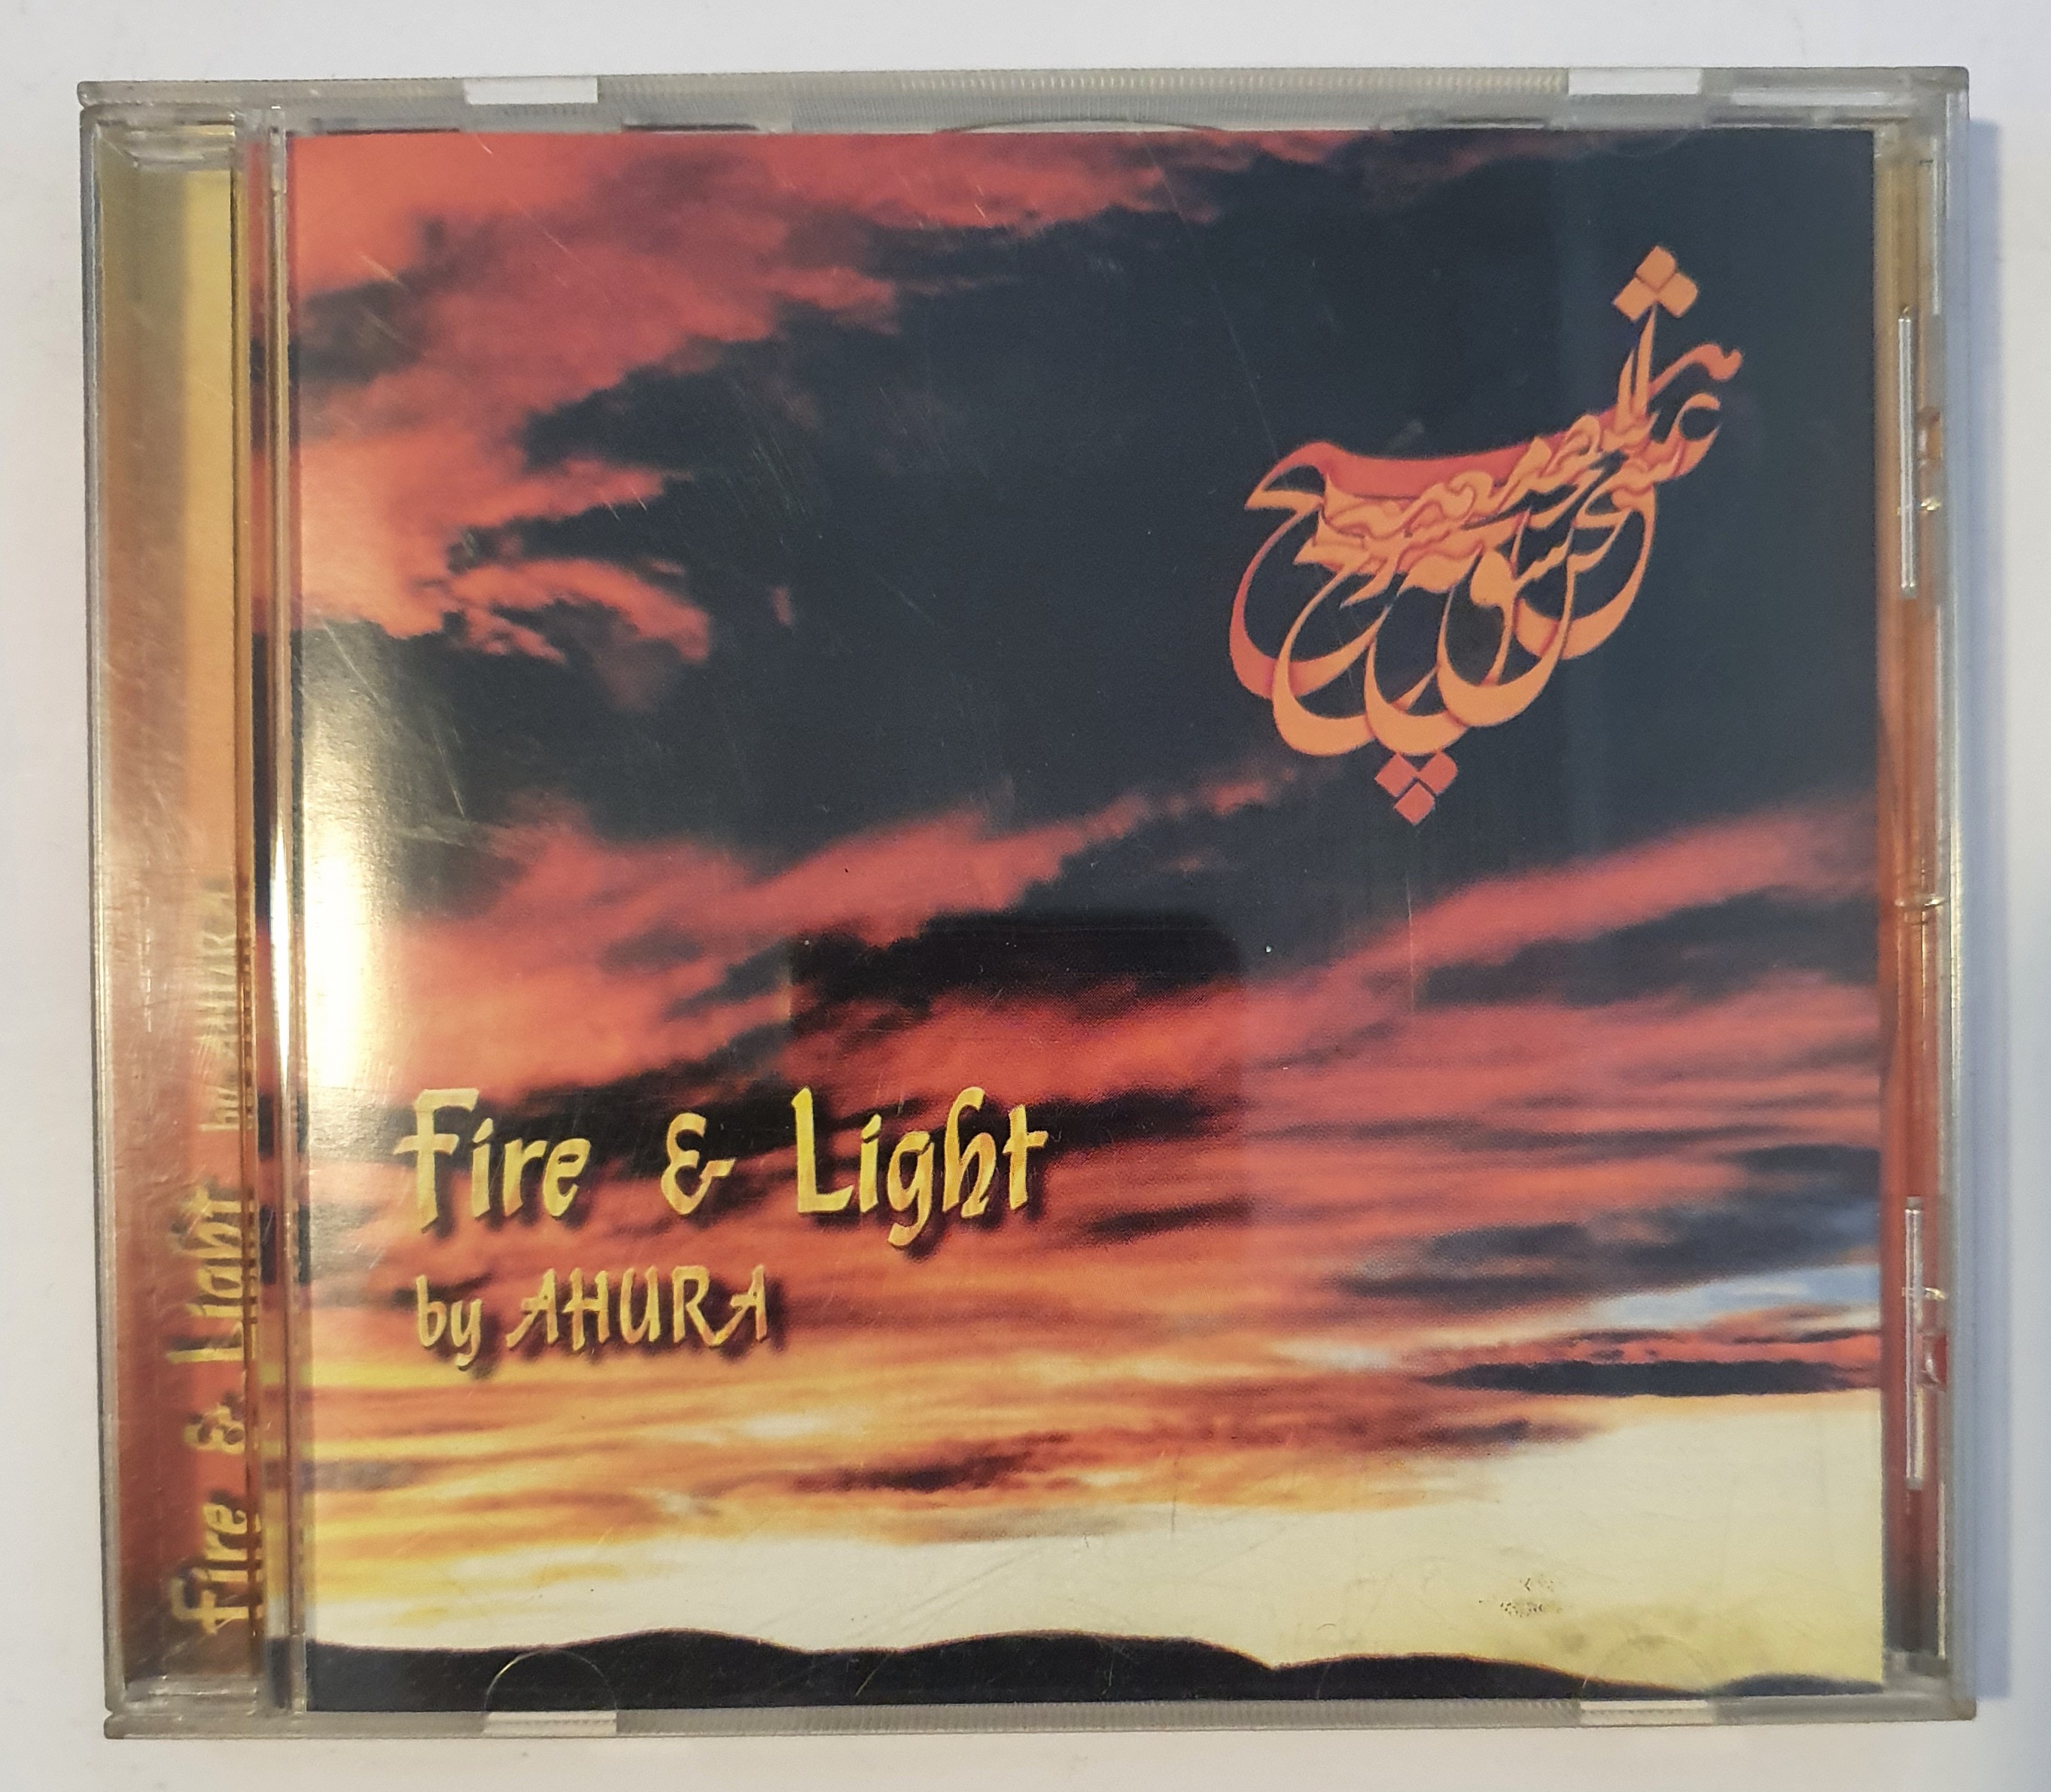 CD Ahura - Fire & Light